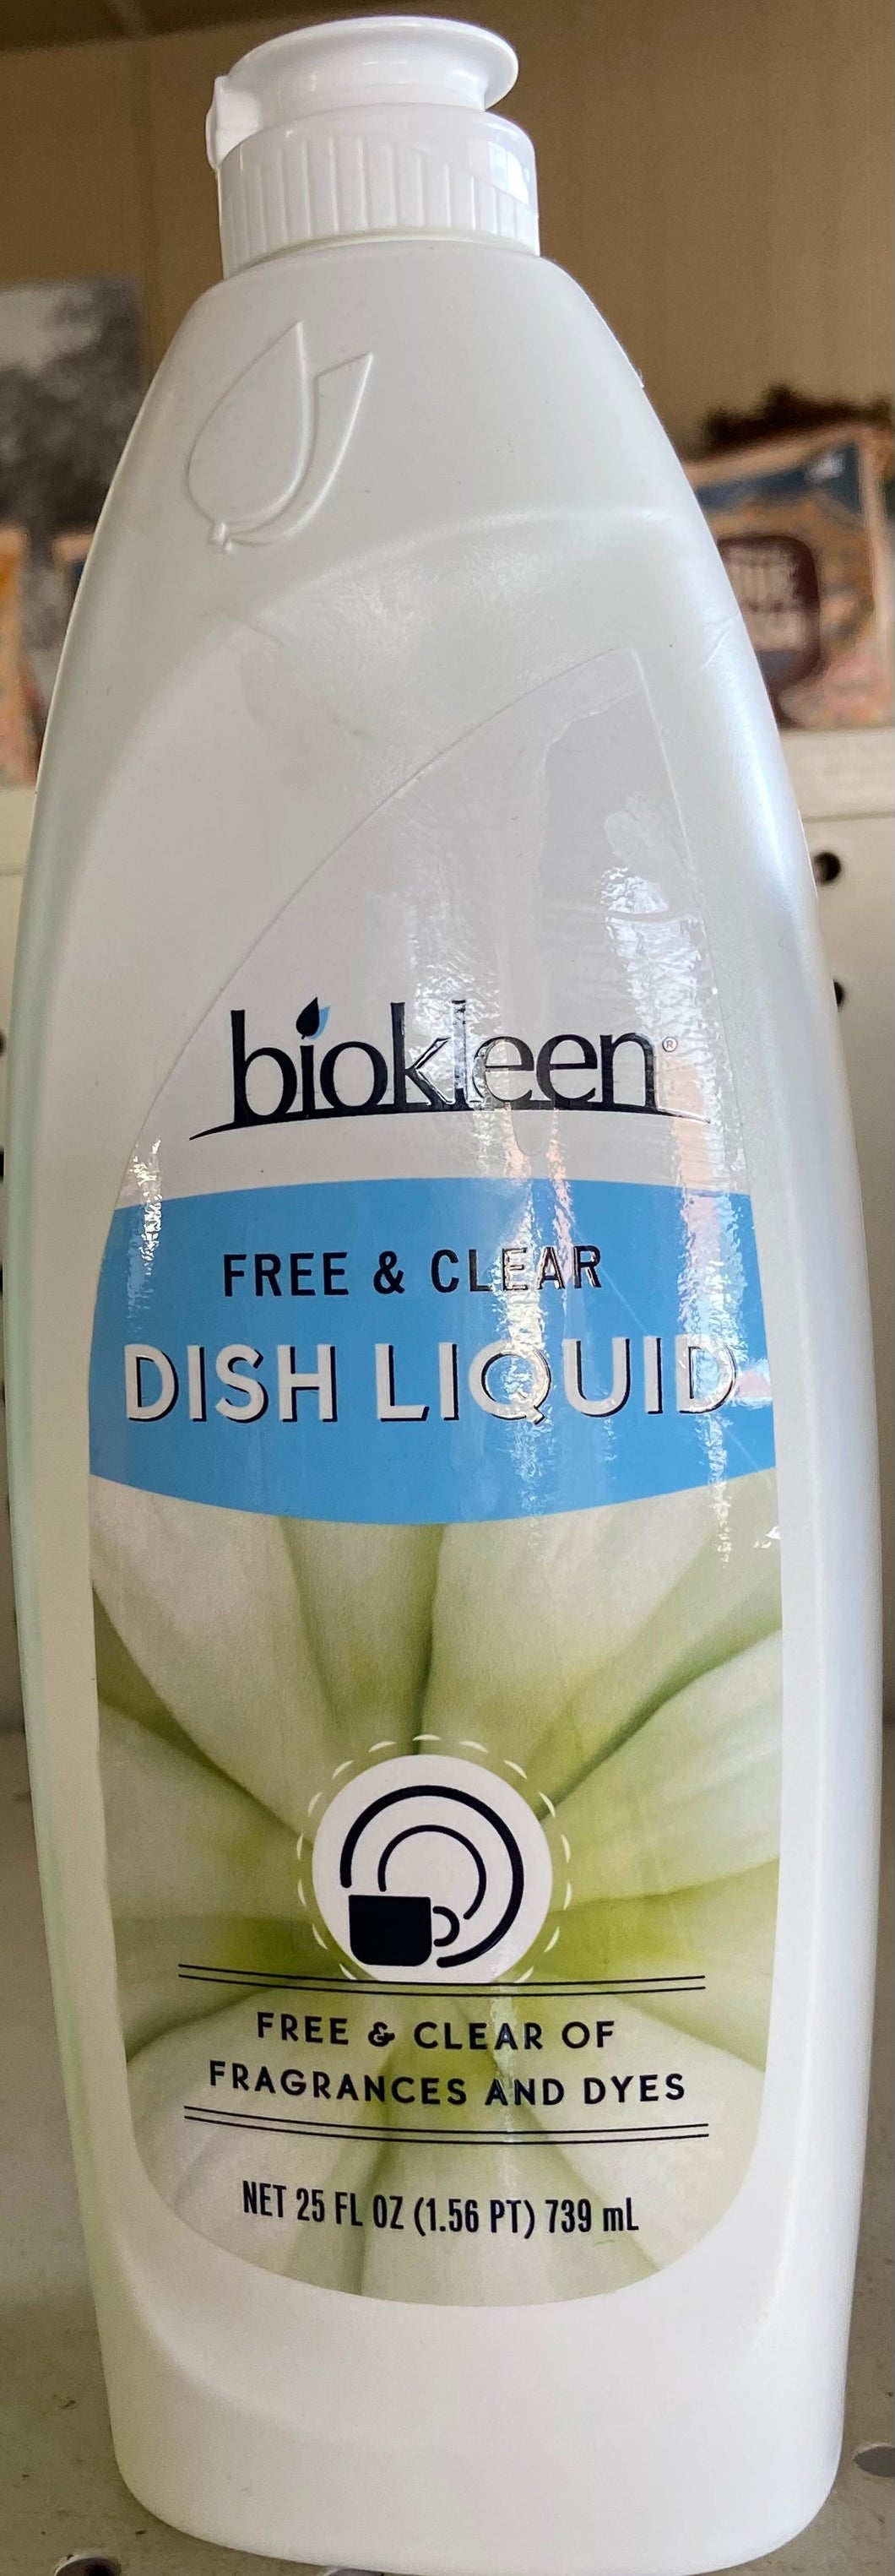 Dish Liquid, Free and Clear, Biokleen